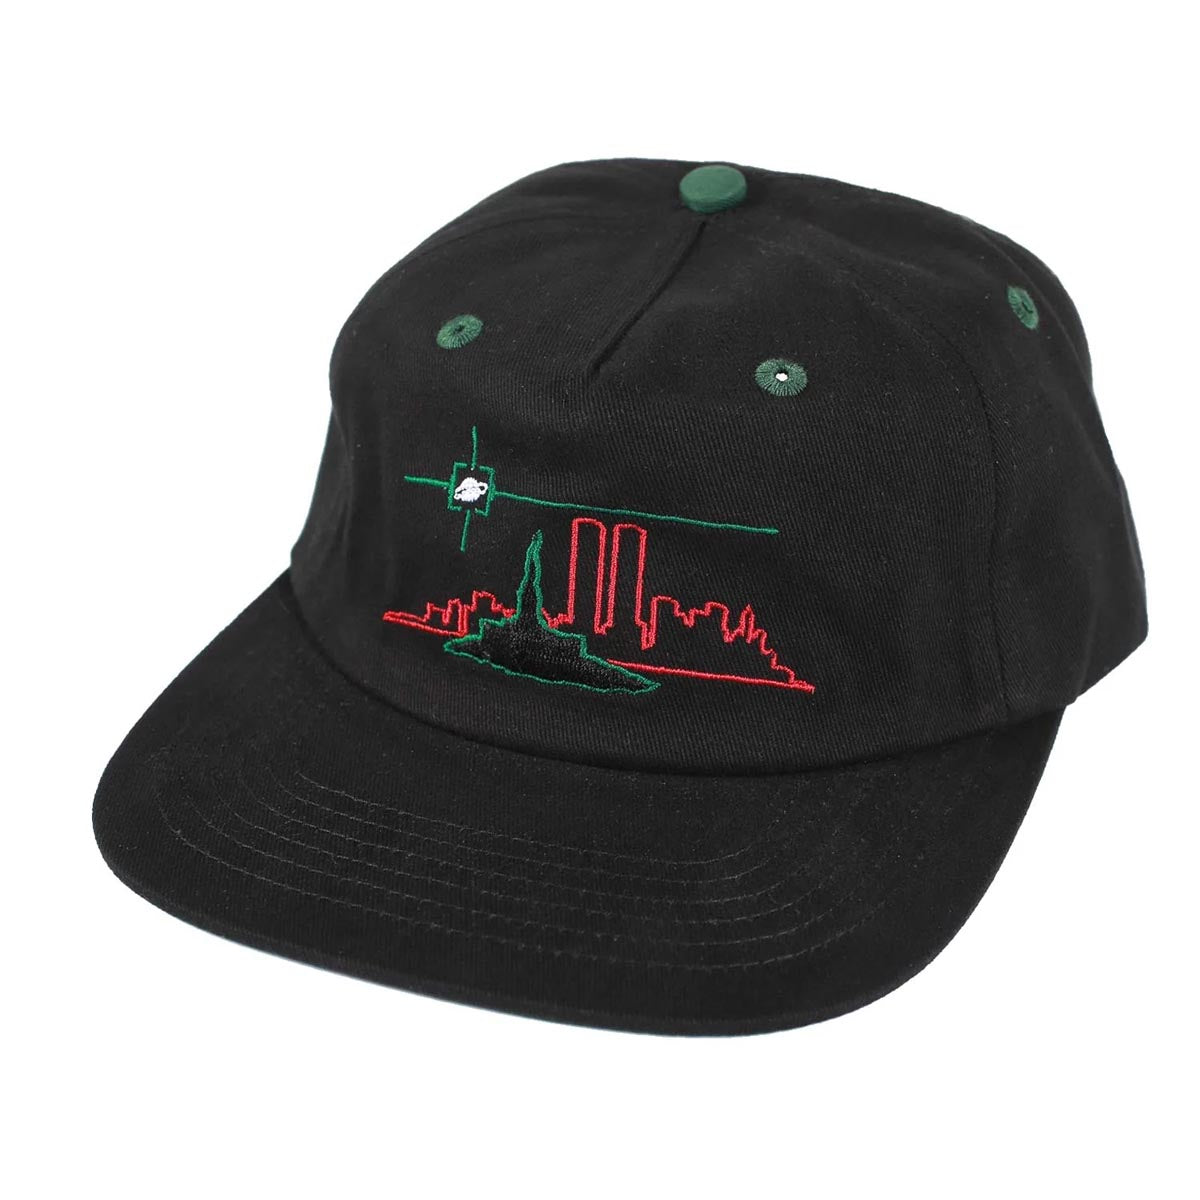 Theories Crosshairs Snapback Hat - Black/Green image 1